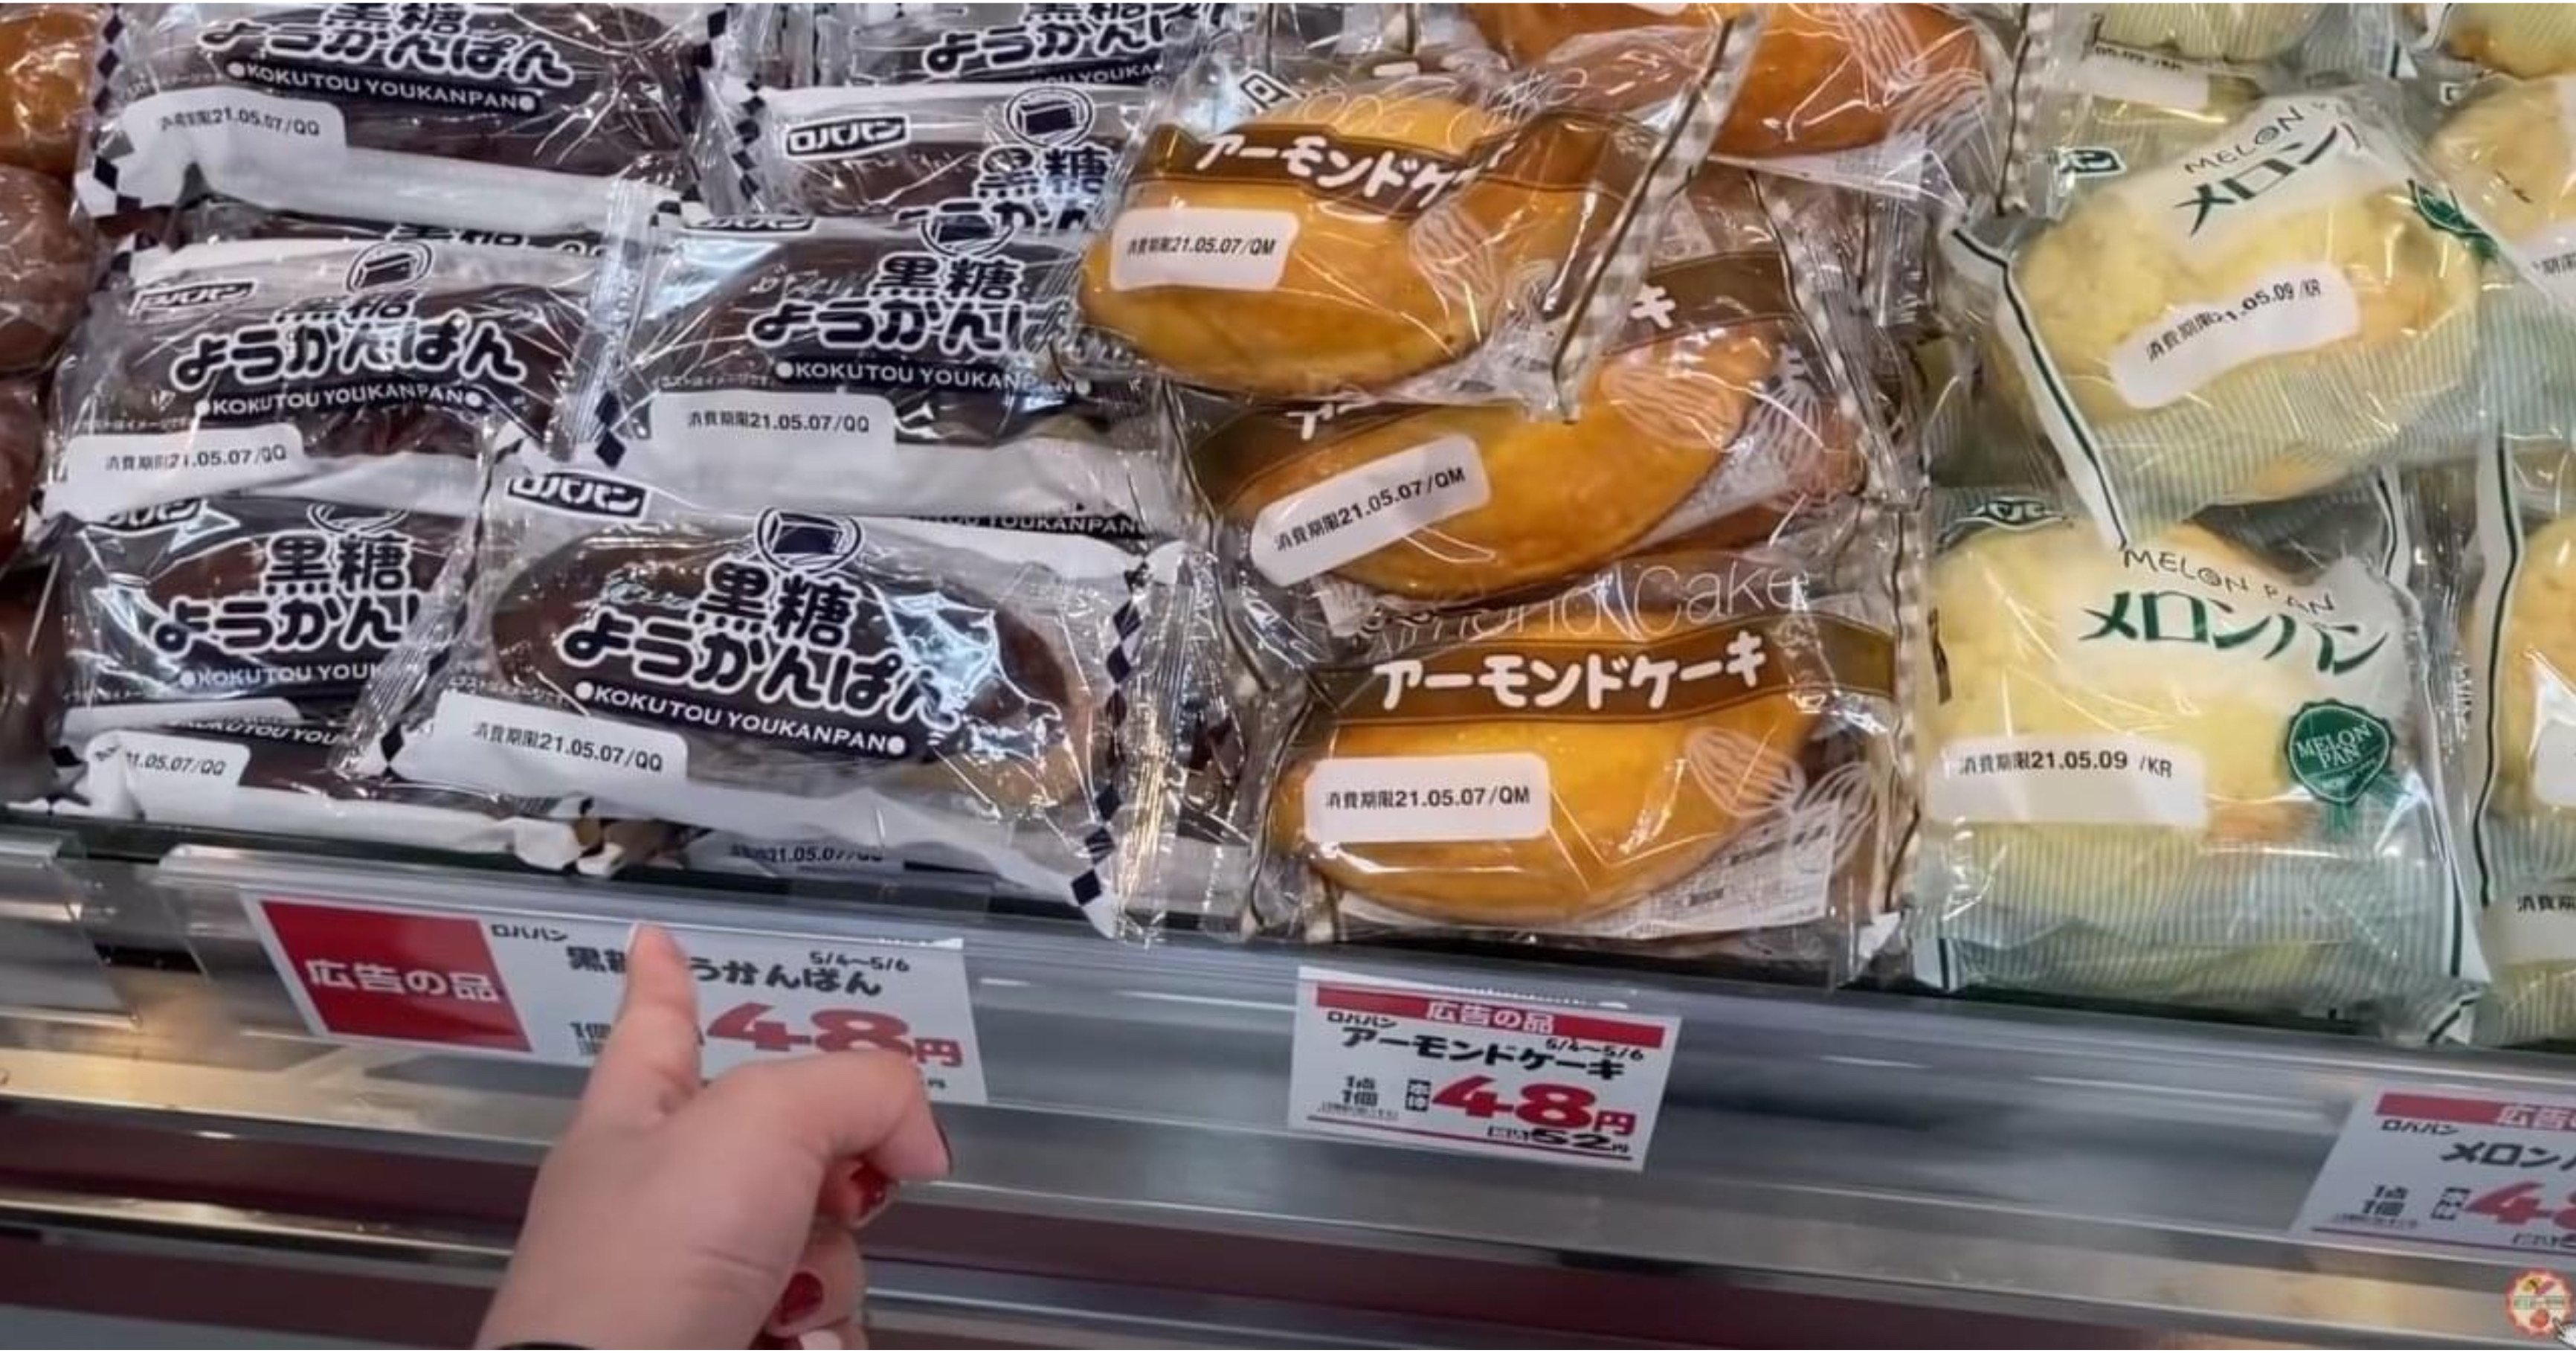 baf2e037 6bfb 4f03 a564 cf4373c51693.jpeg?resize=1200,630 - 정신나간 일본 빵 가격